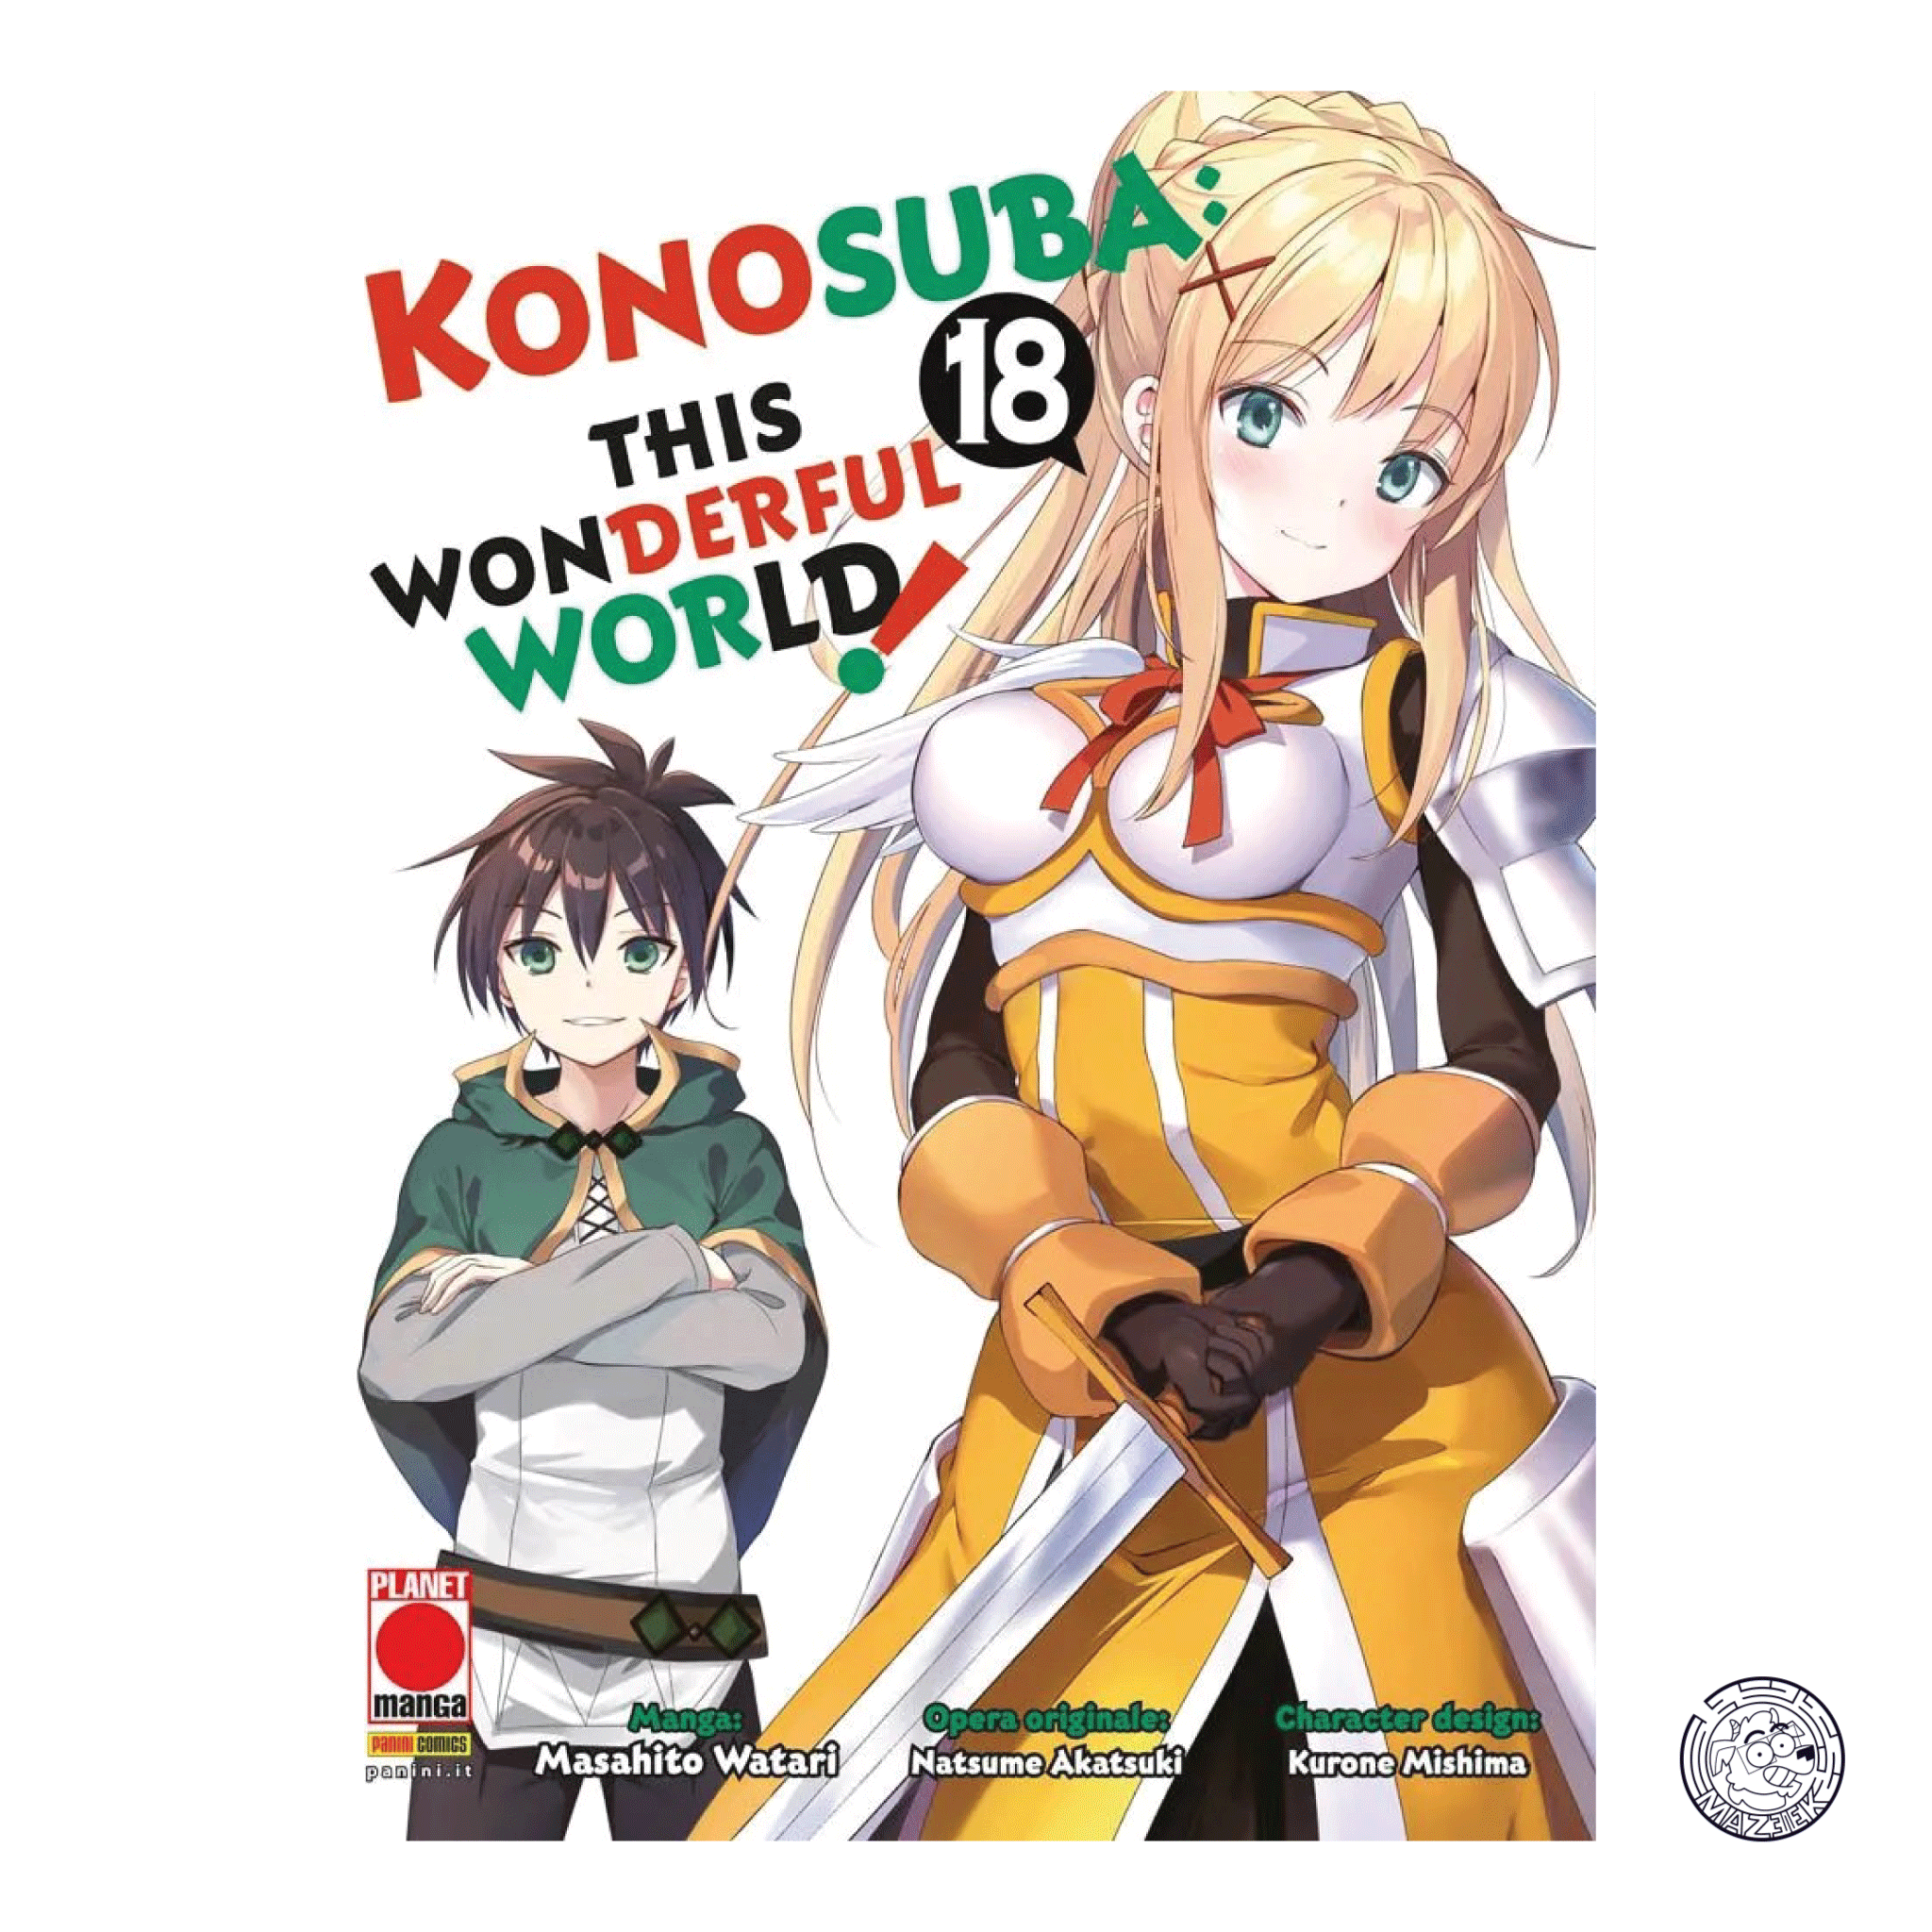 Konosuba! This Wonderful World 18